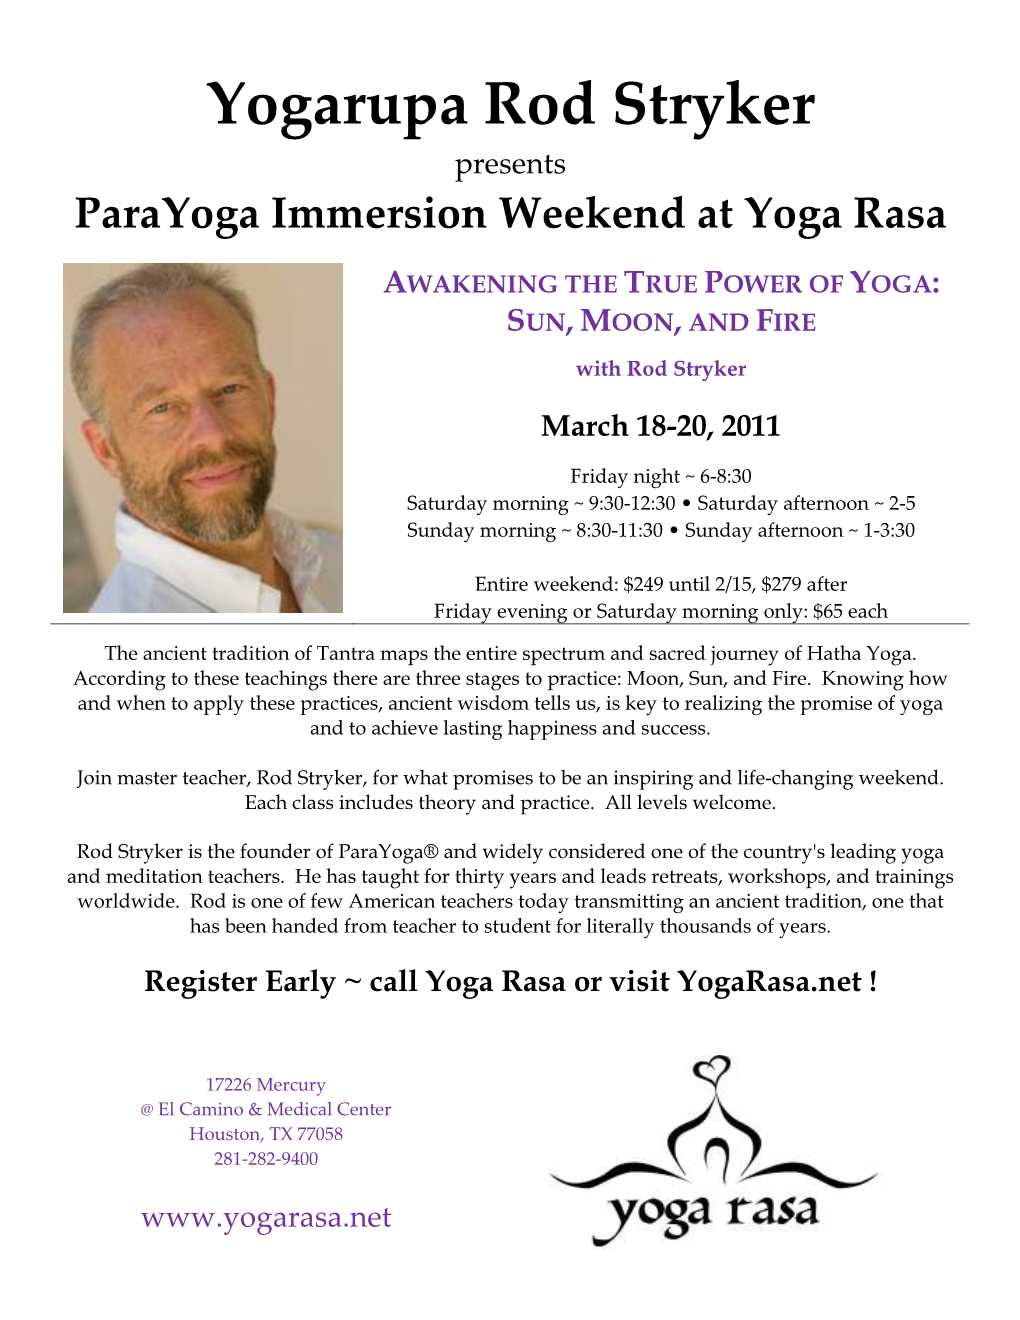 Yogarupa Rod Stryker Presents Parayoga Immersion Weekend at Yoga Rasa